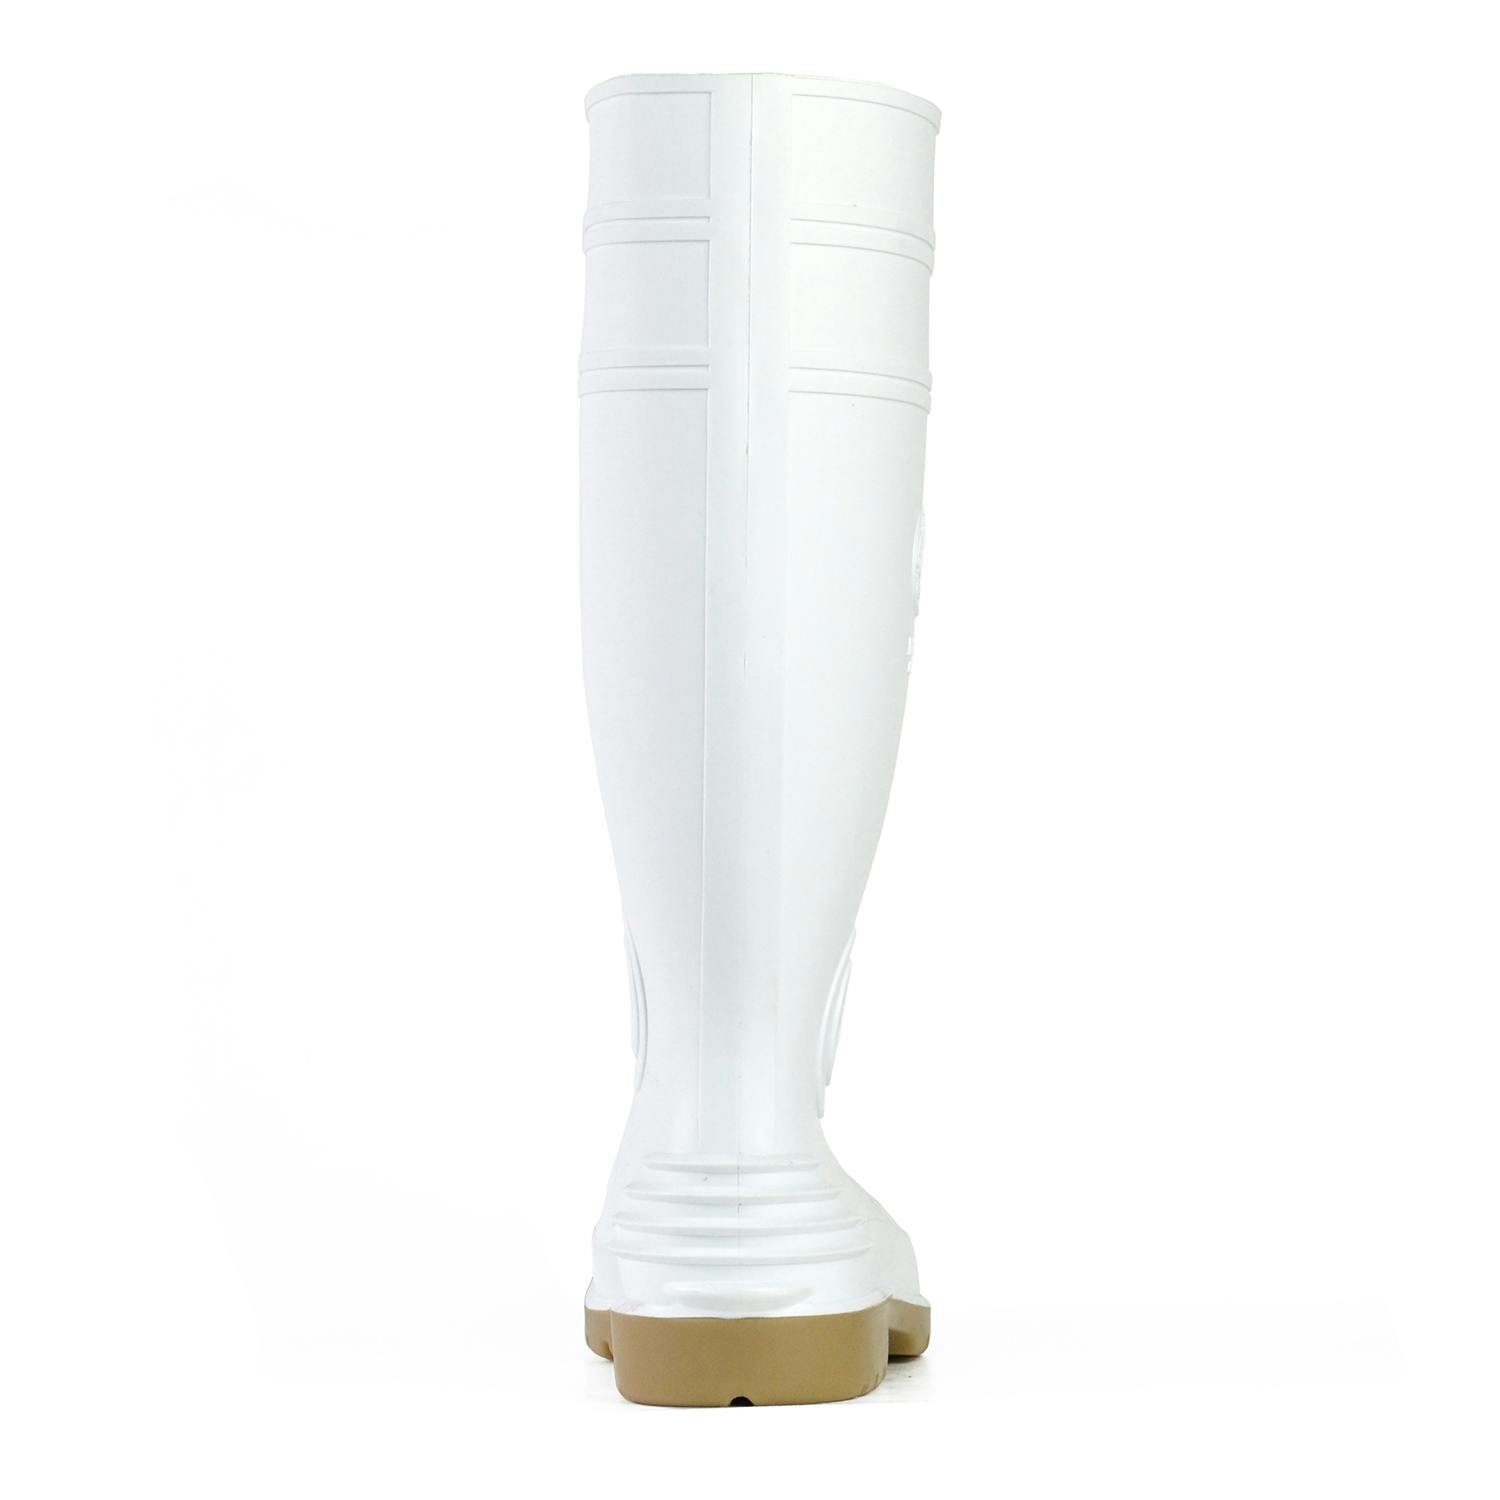 Bata Industrials Jobmaster 2-400-ST - White / Gristle PVC 400Mm Safety Boot (PVC Jobmaster 2)_4